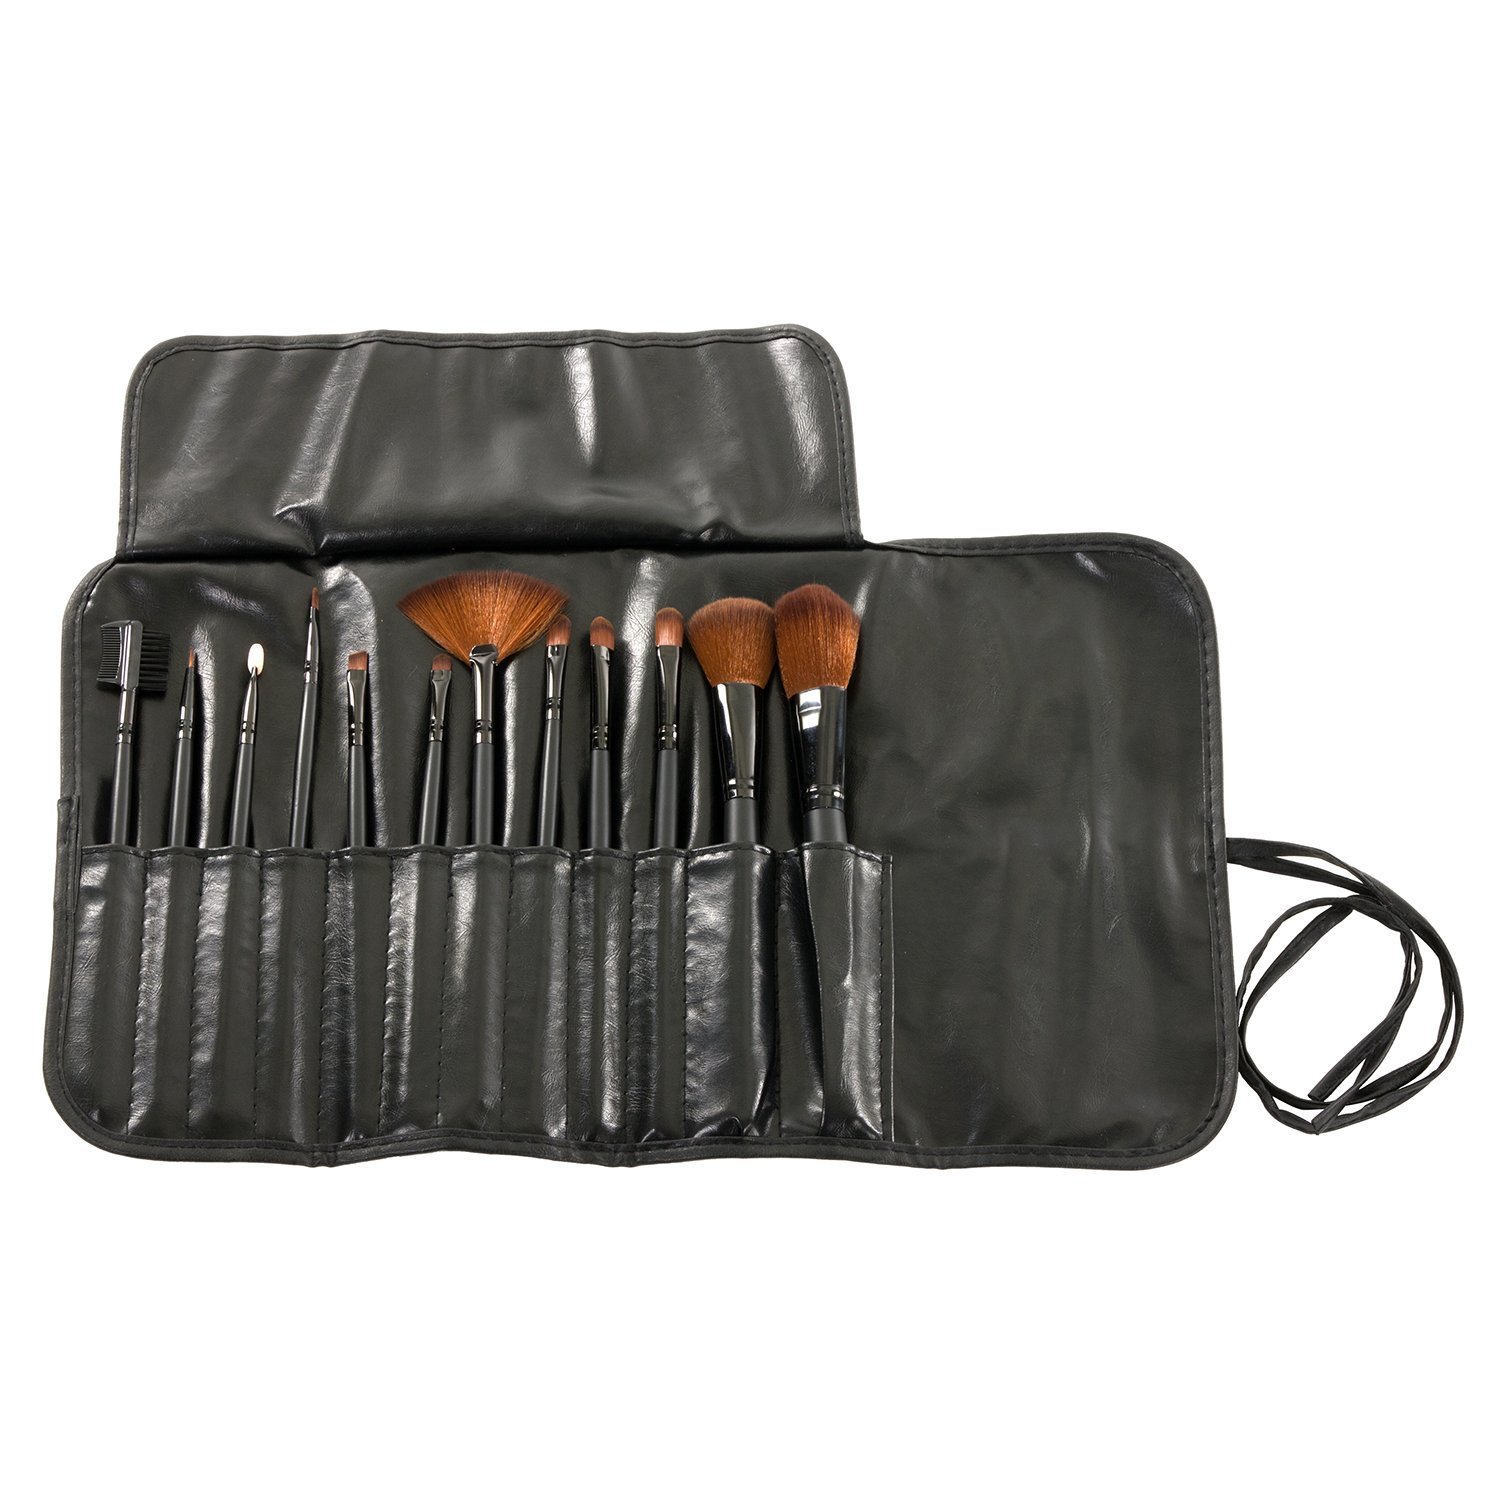 Mash 12 pc studio pro makeup brush set w/ leather case.